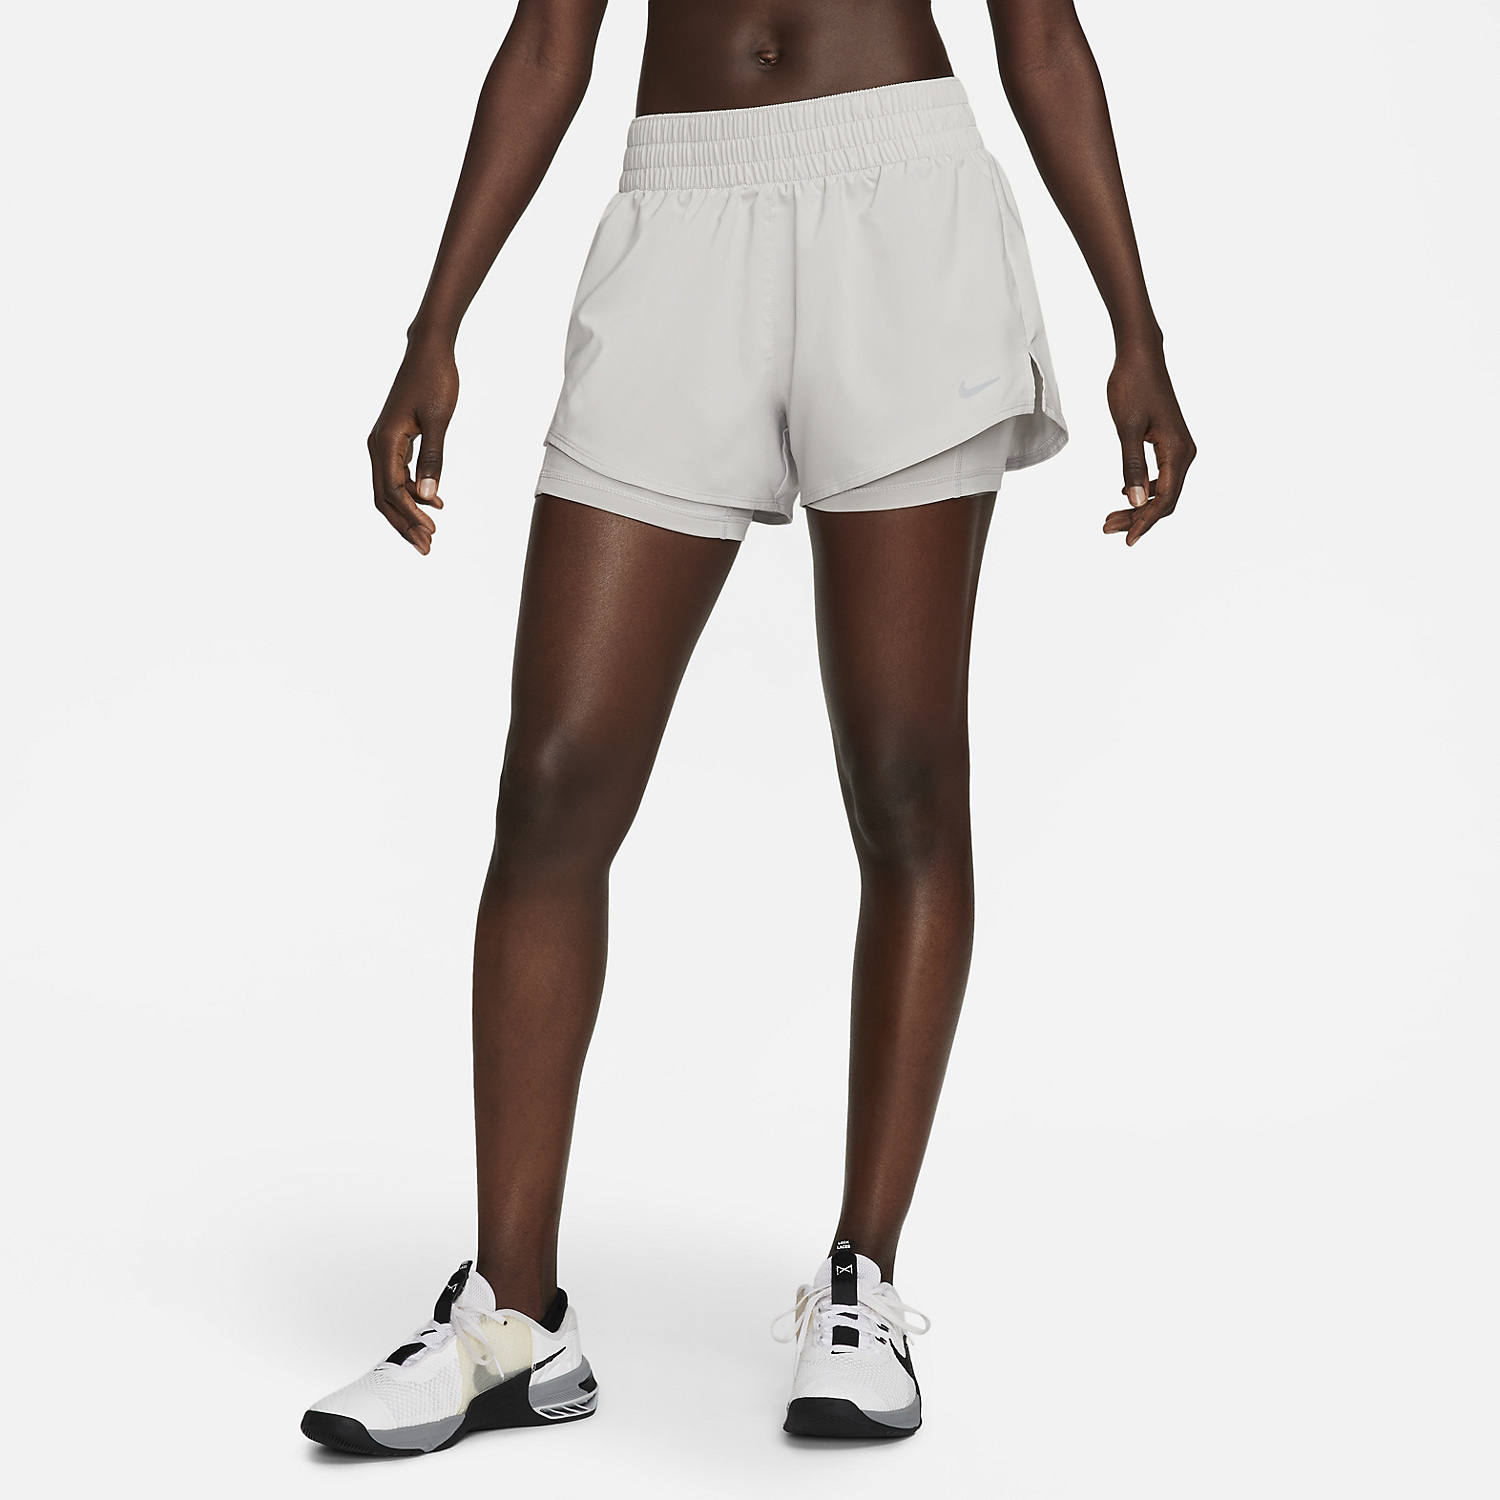 Nike One 2 in 1 3in Women's Tennis Shorts - Light Iron Ore